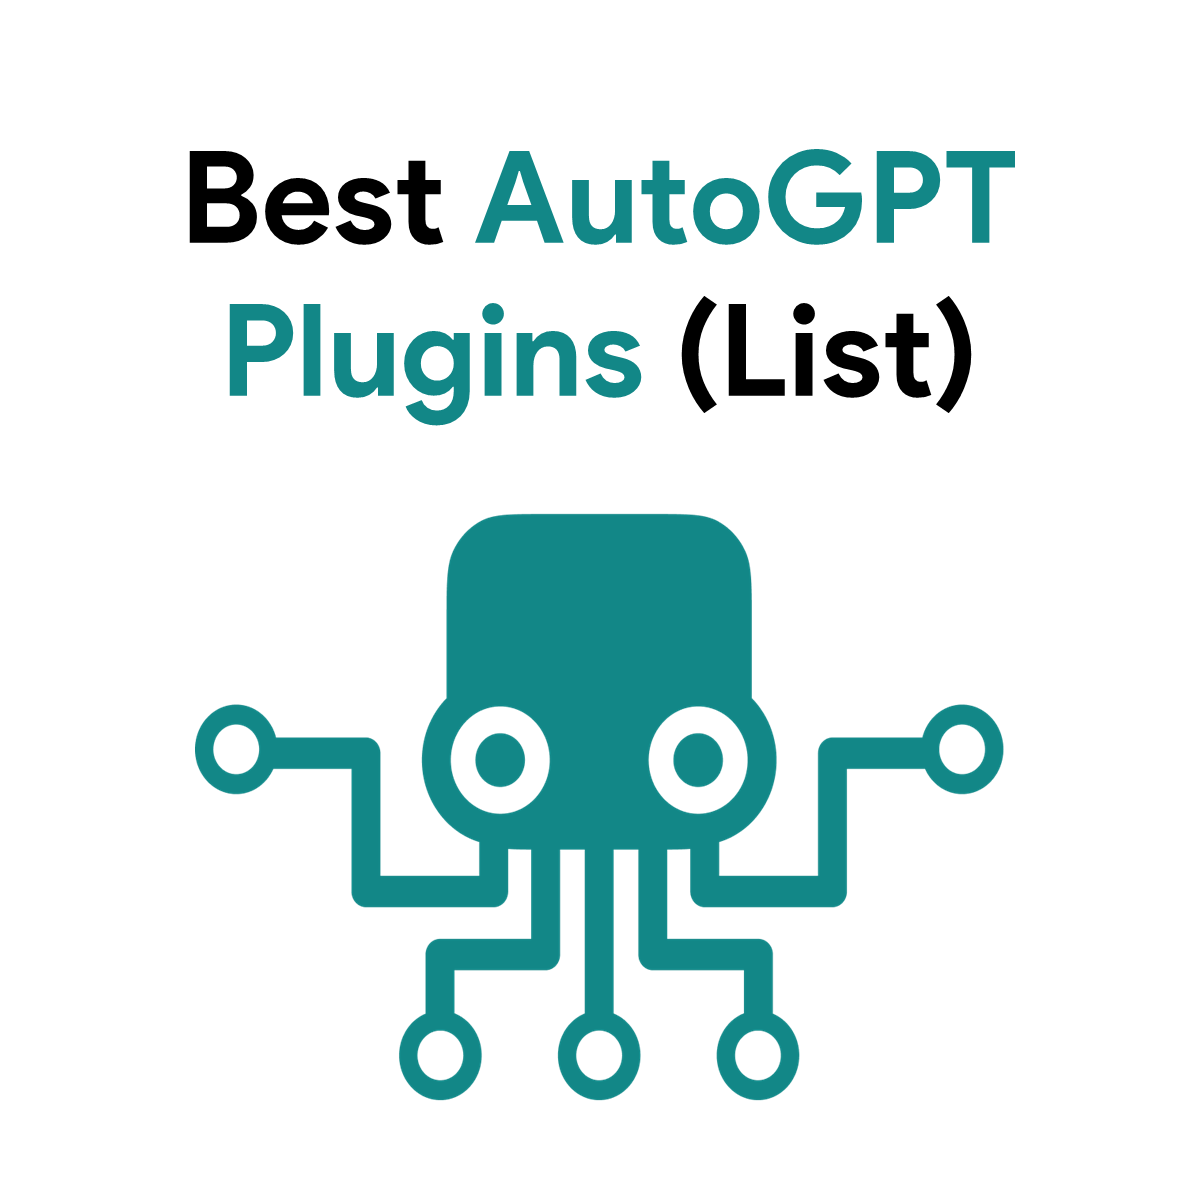 Best AutoGPT Plugins